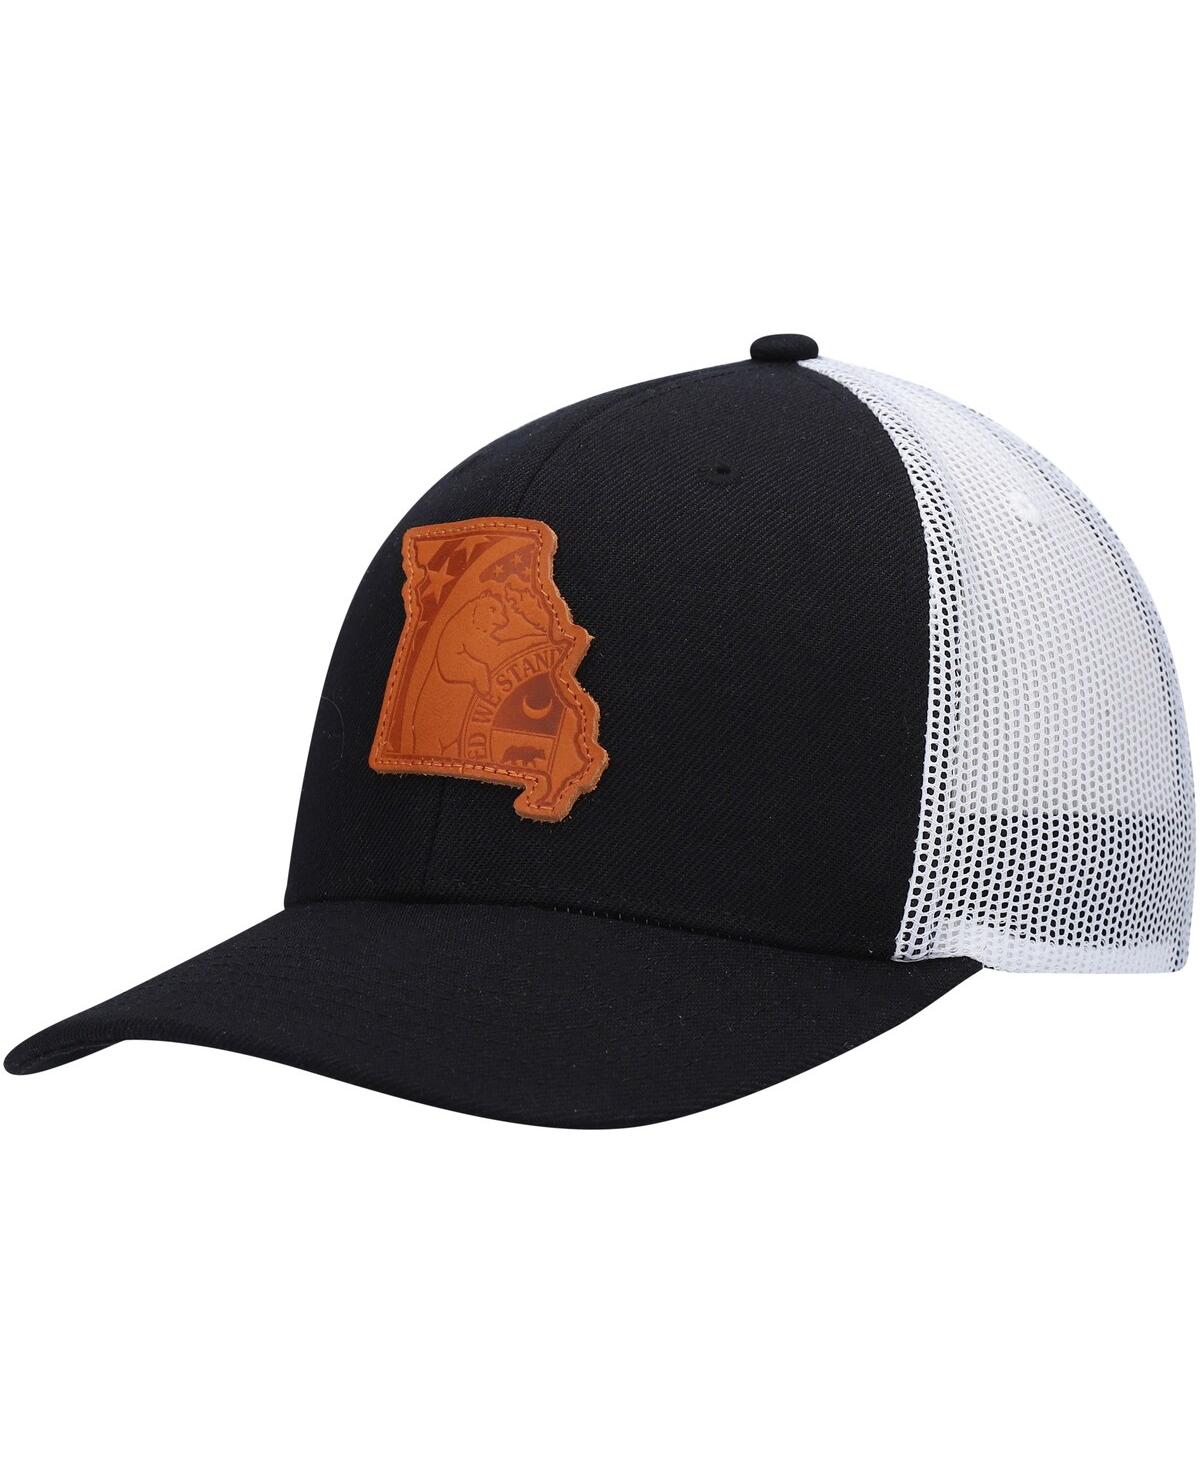 Shop Local Crowns Men's  Black Missouri Leather State Applique Trucker Snapback Hat